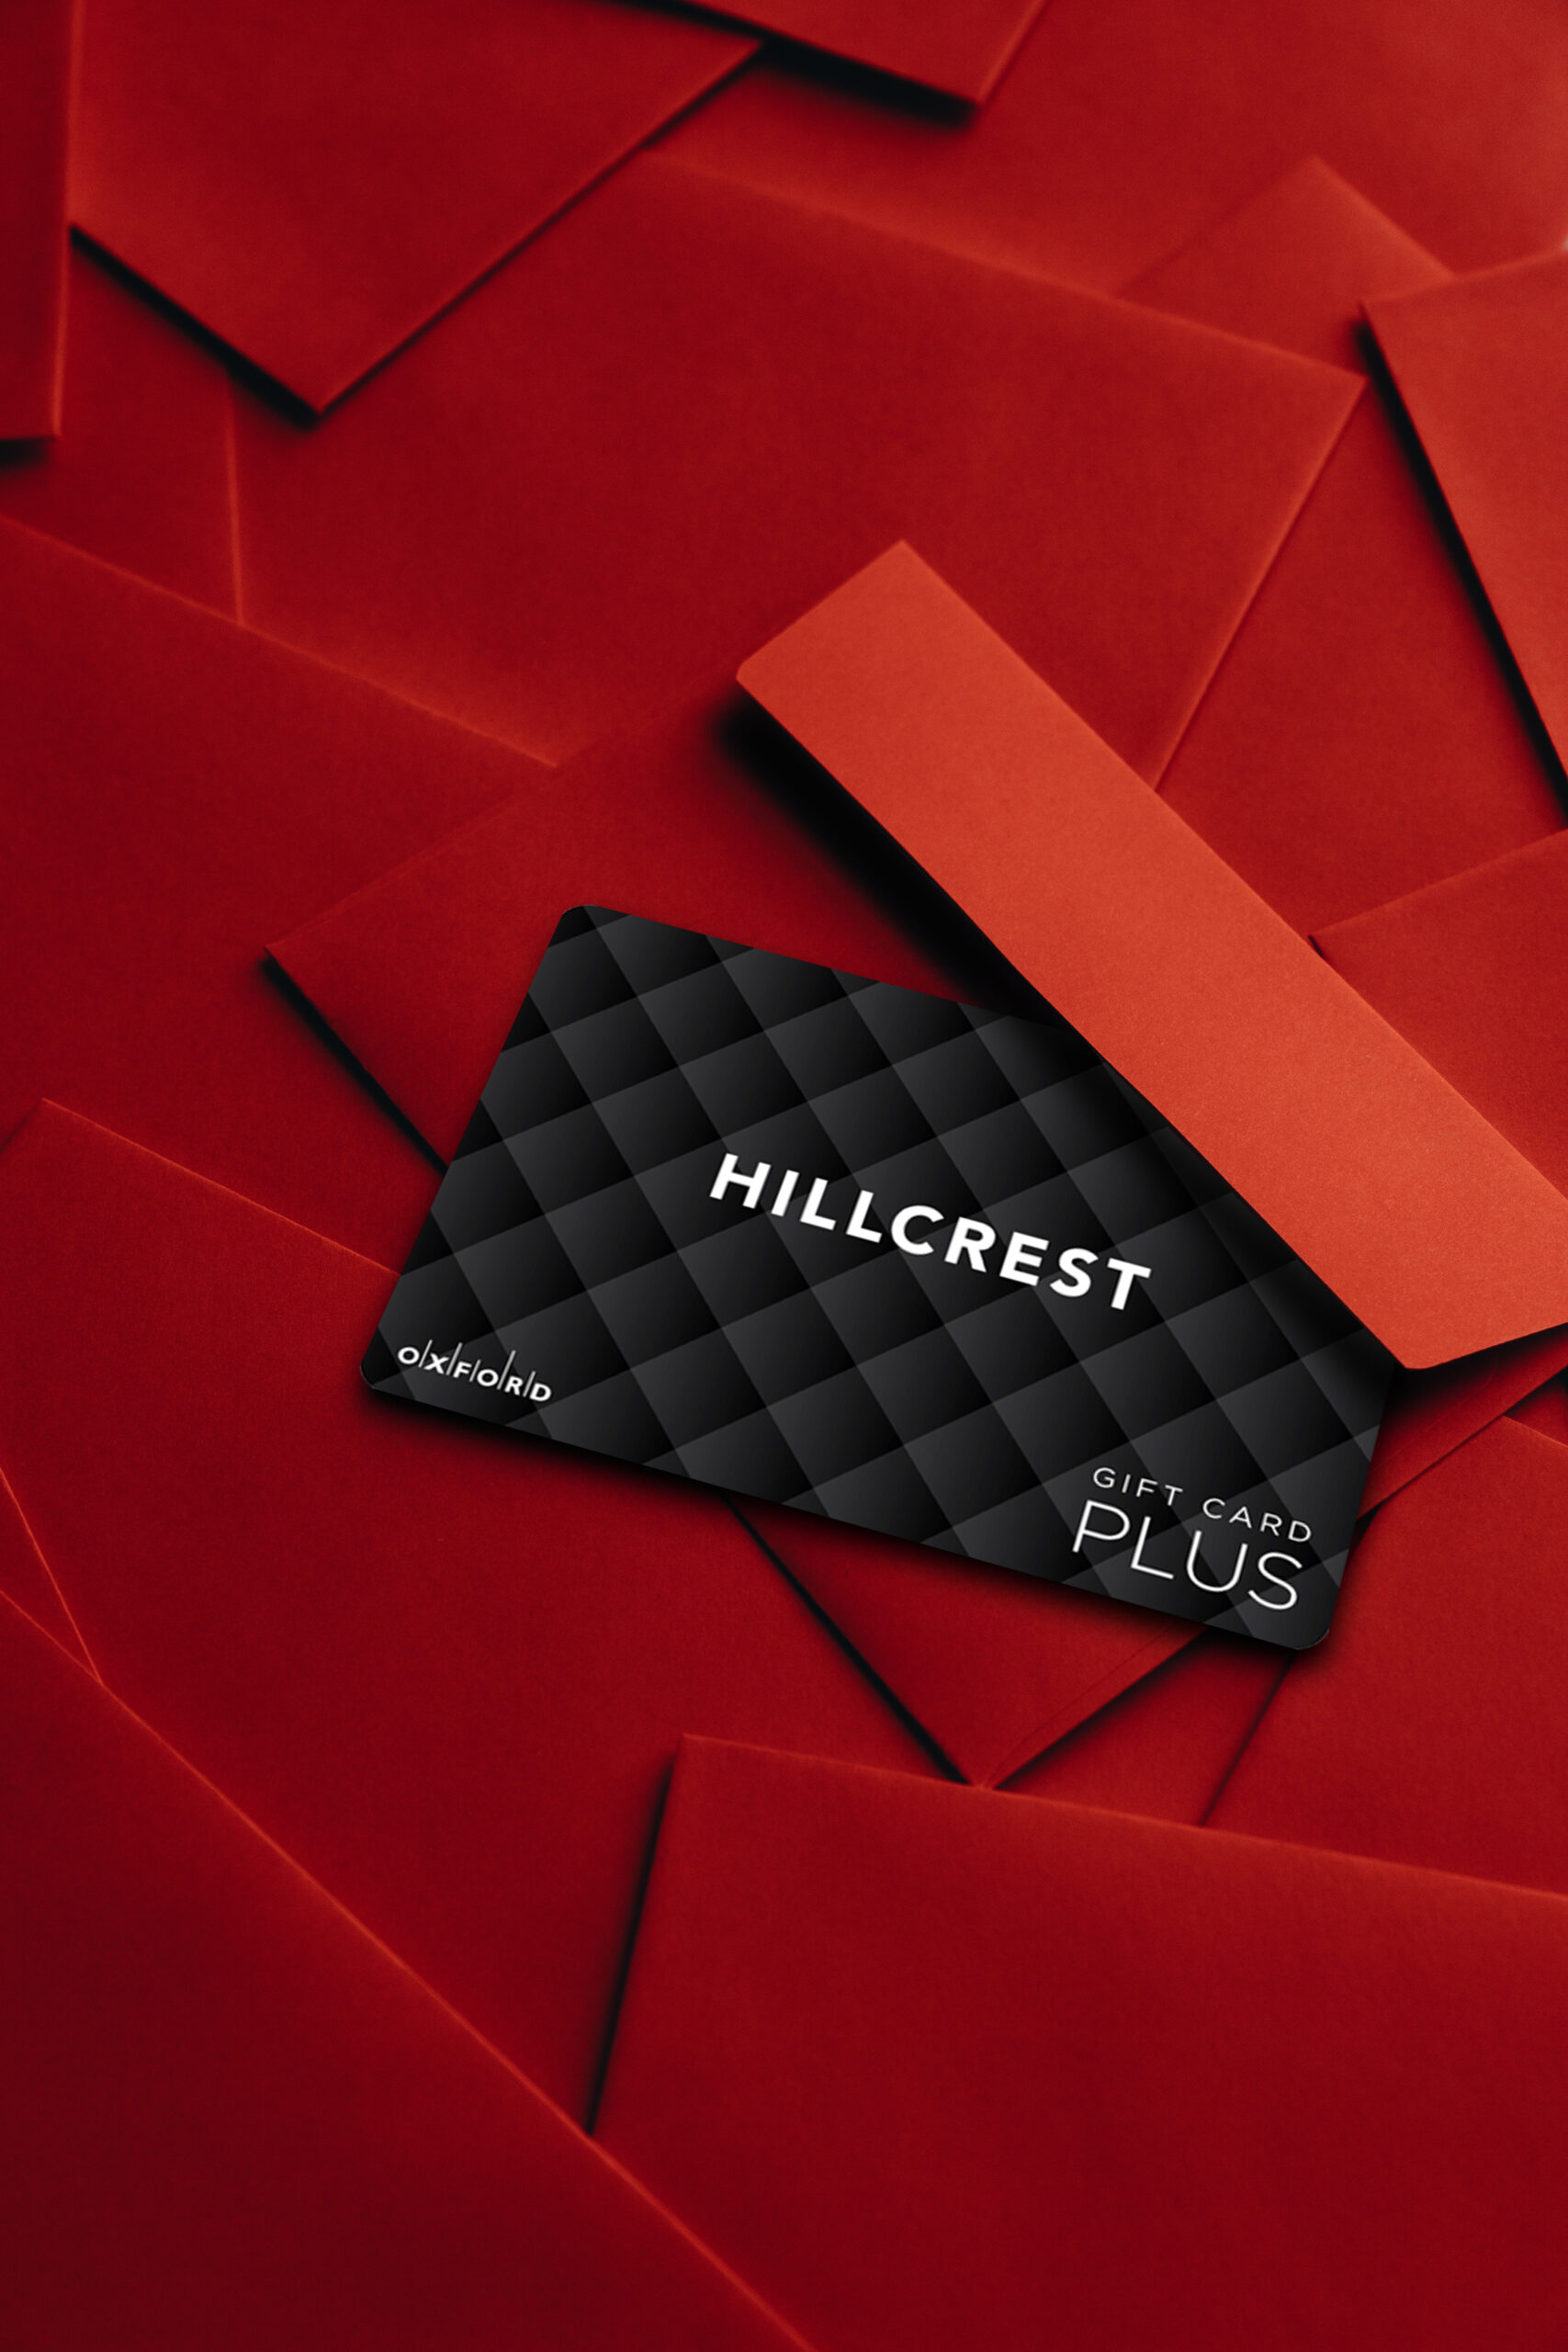 Hillcrest Mall gift card